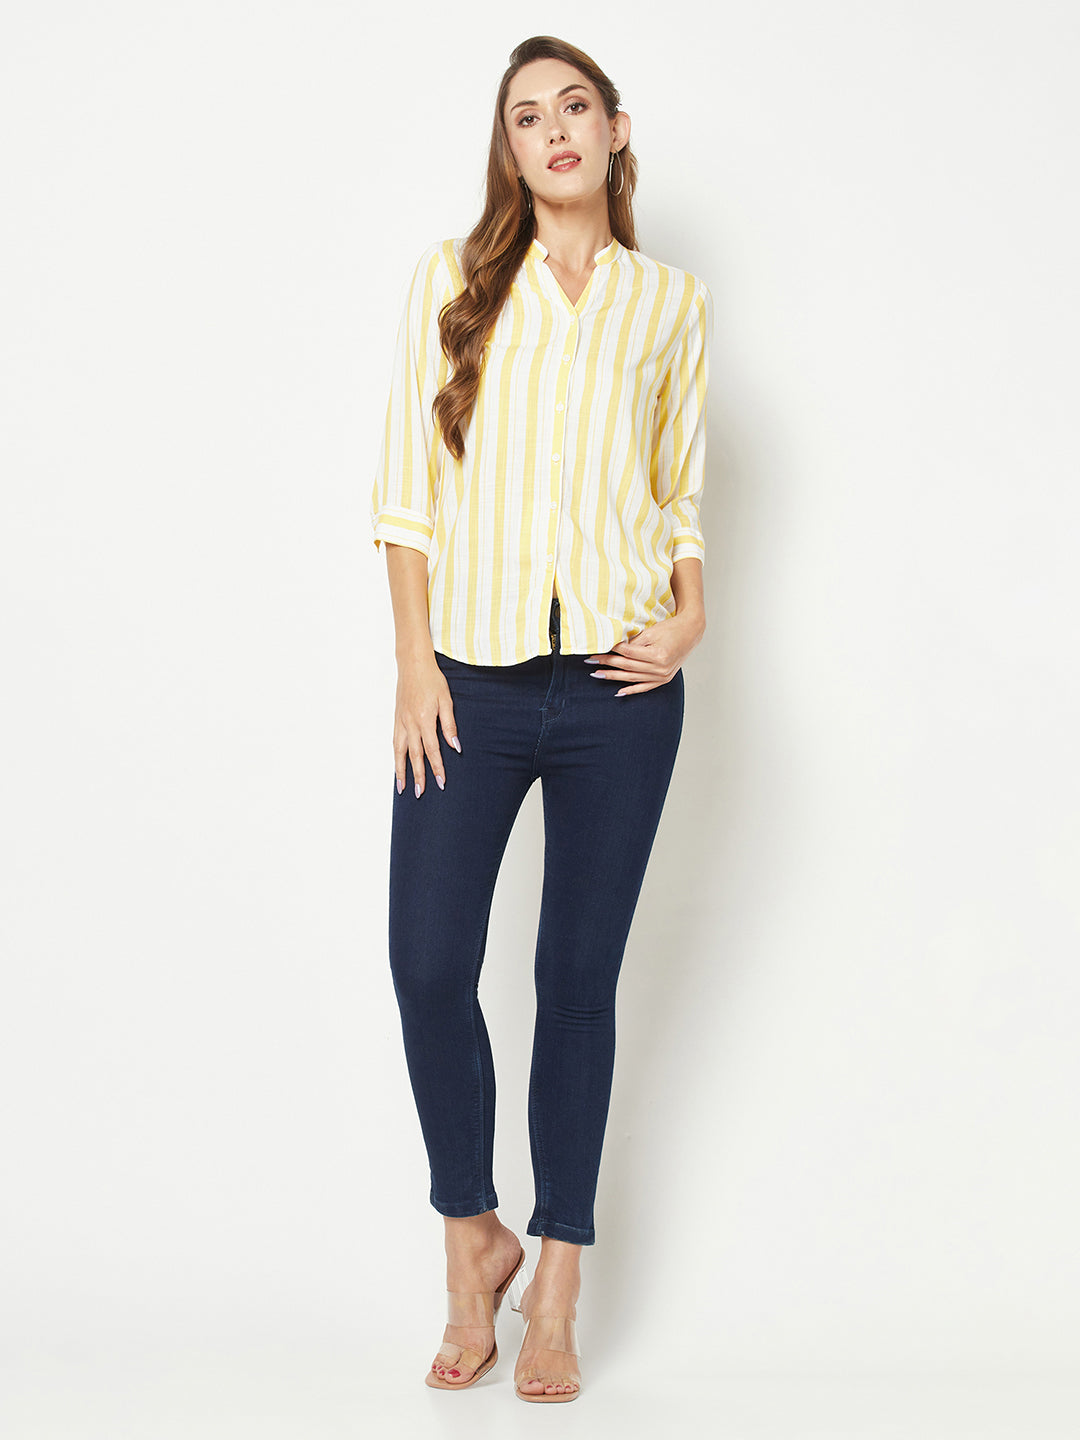  Yellow Striped Shirt